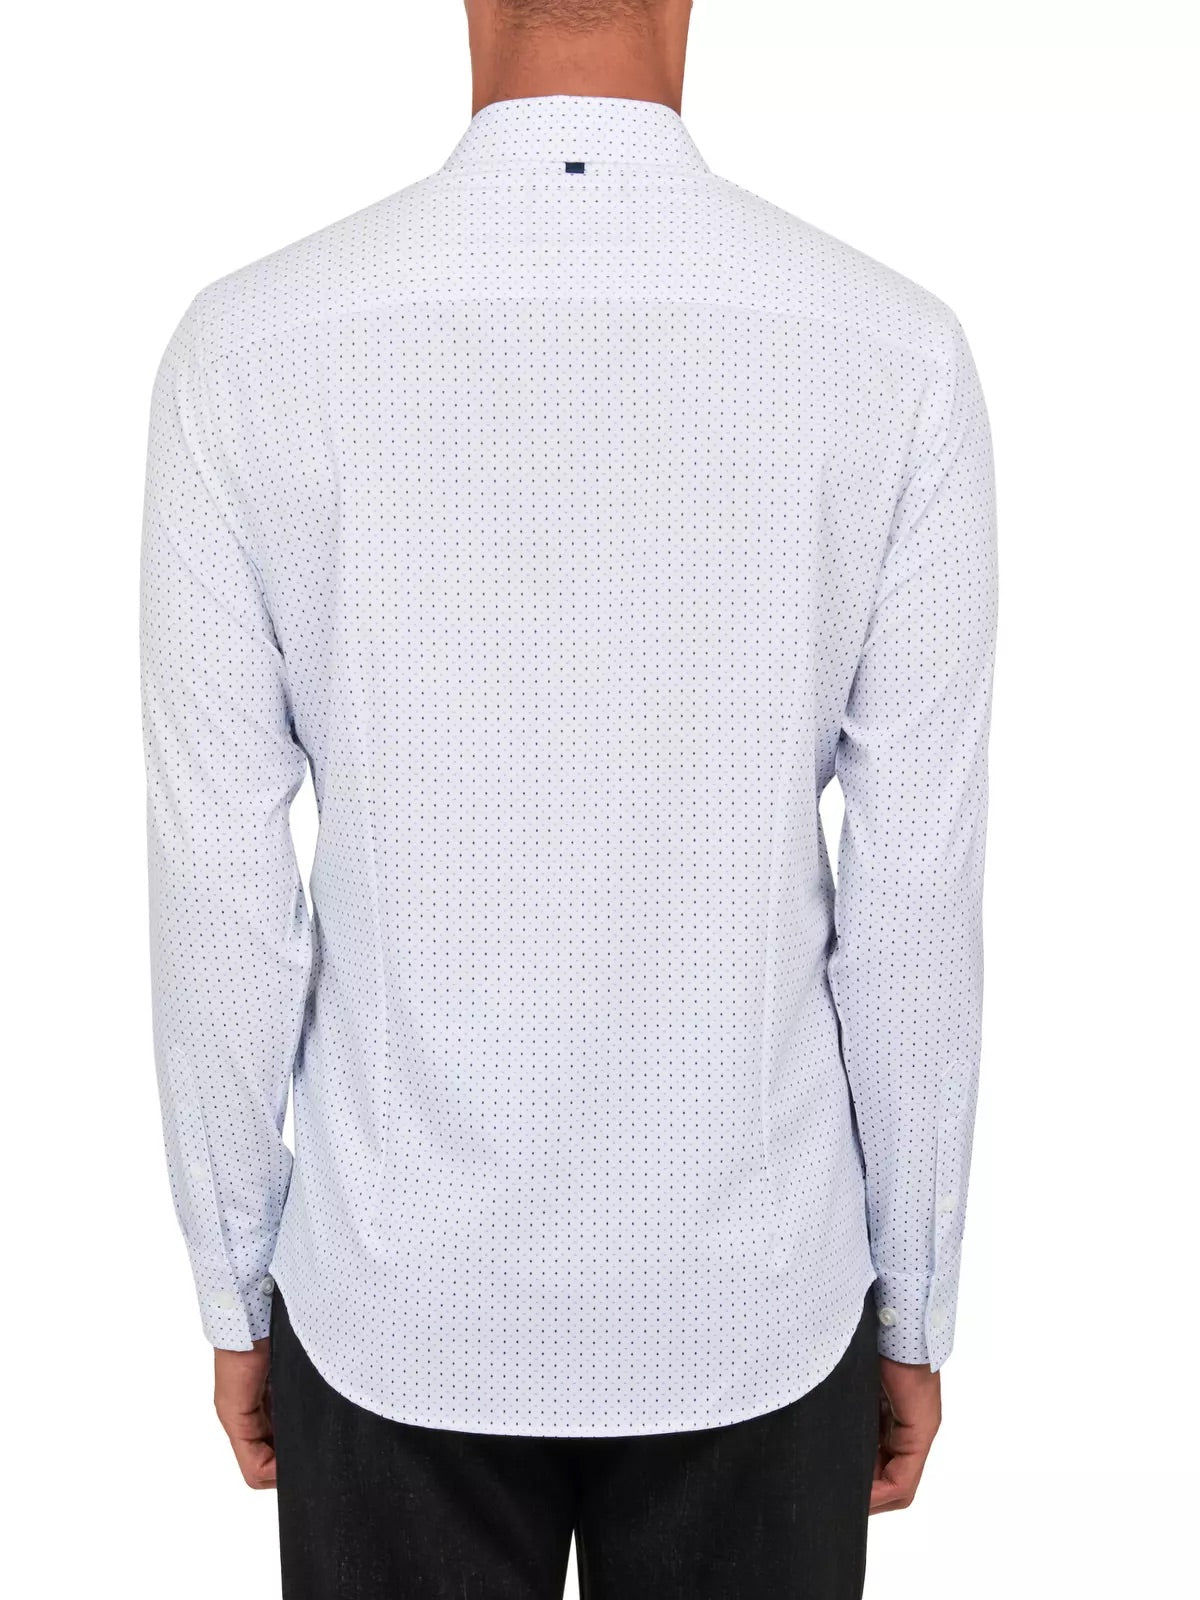 Diamond Dot Long Sleeve 4-Way Stretch Shirt White Navy Dot